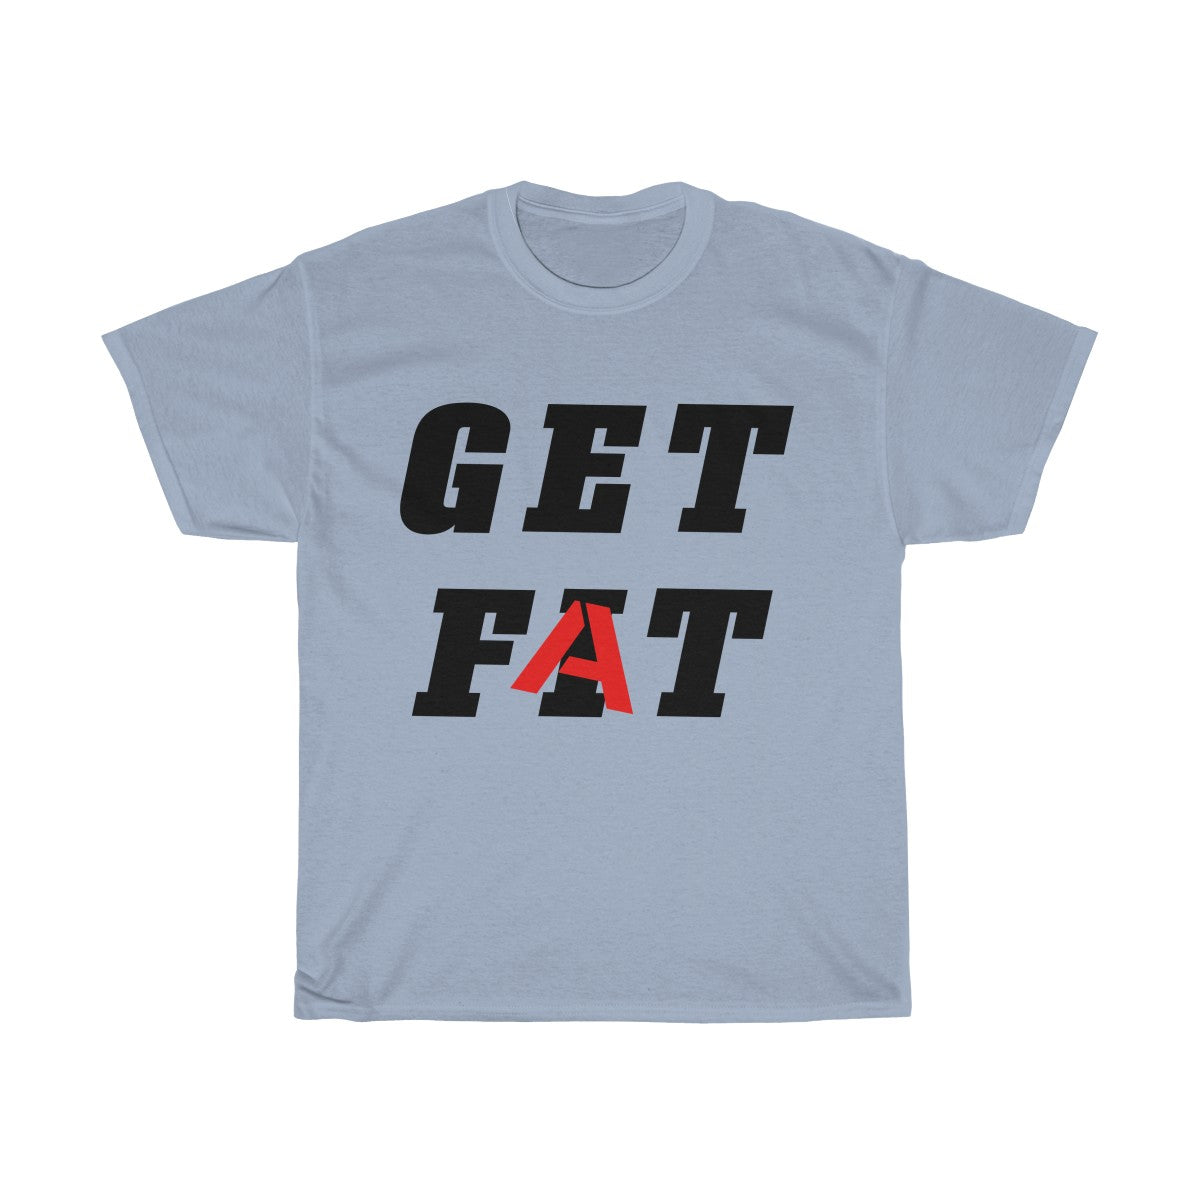 Get Fat Funny Fitness Parody T-Shirt